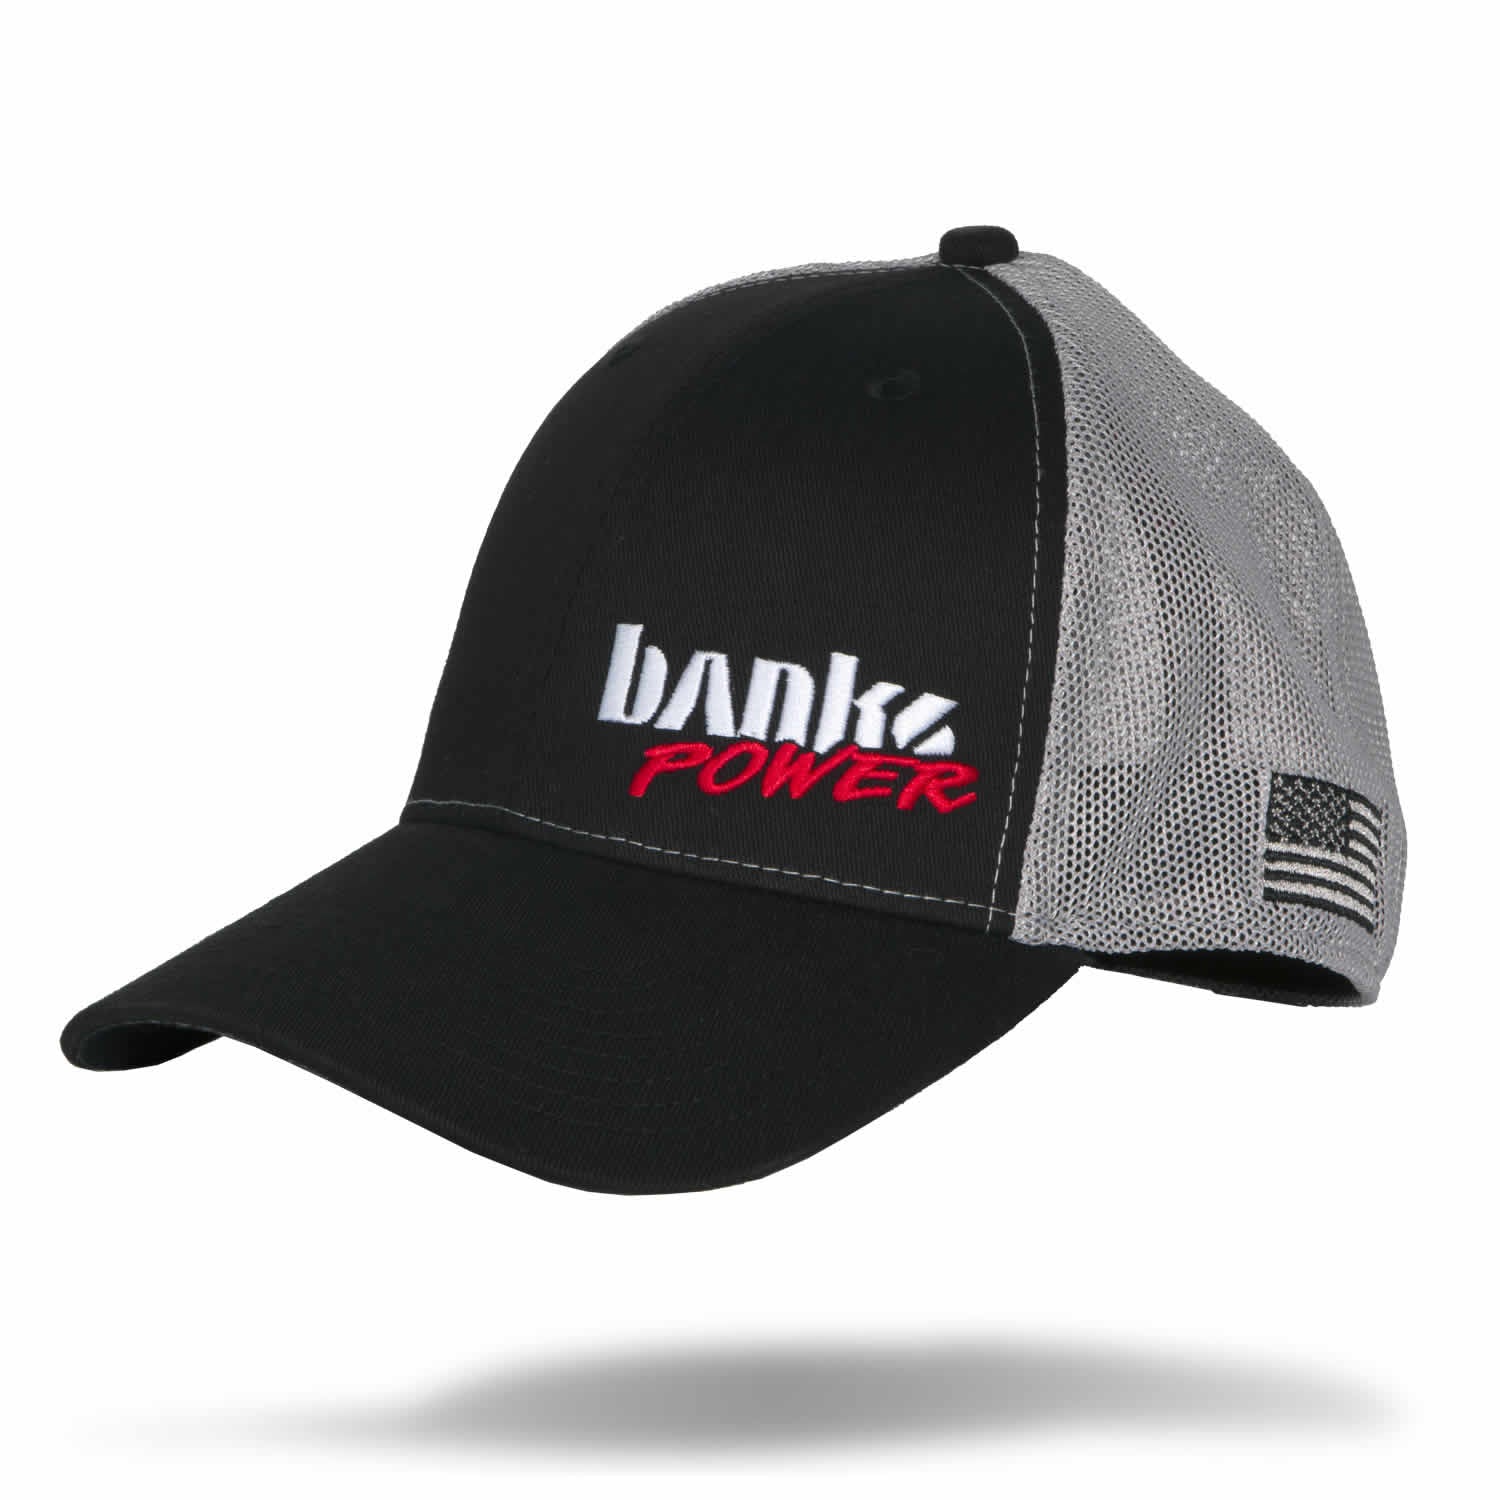 Banks Power snap-back hat